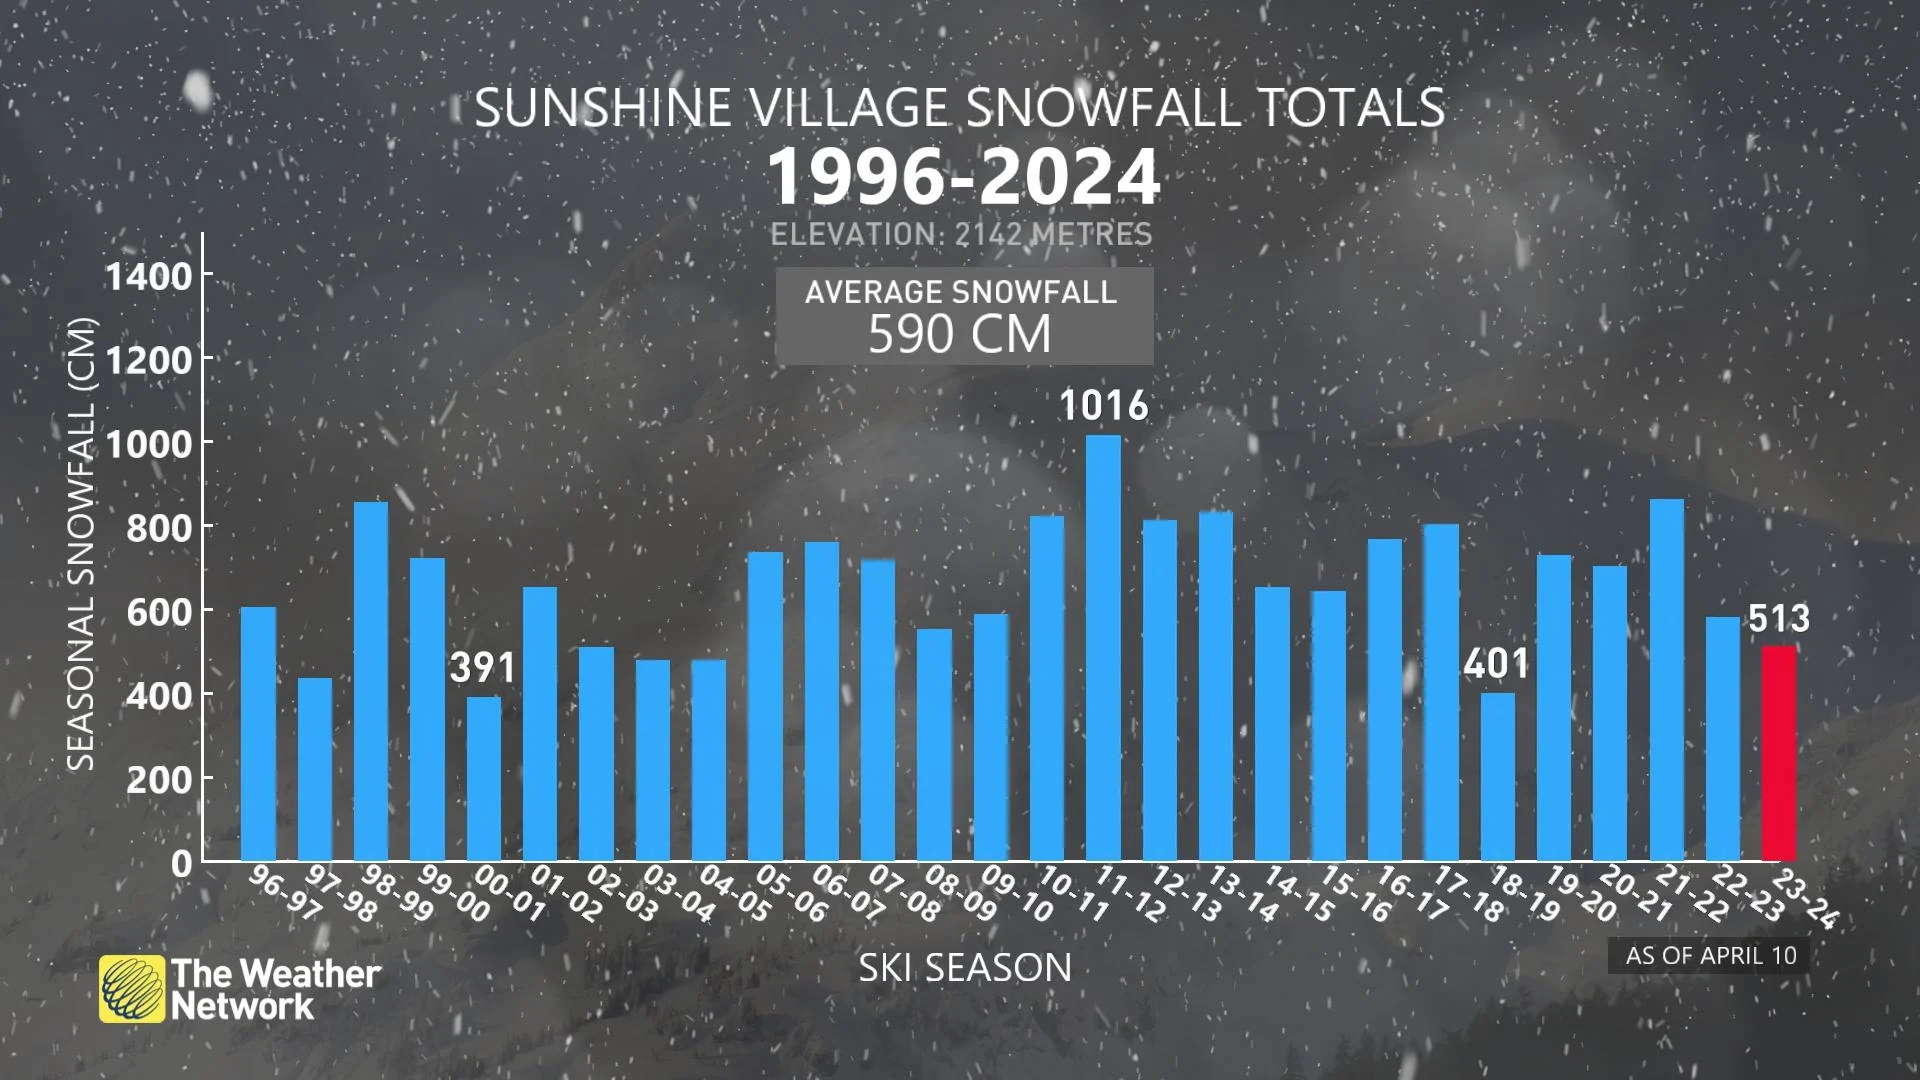 Sunshine Village Ski Resort average snowfall totals from 1996-2024